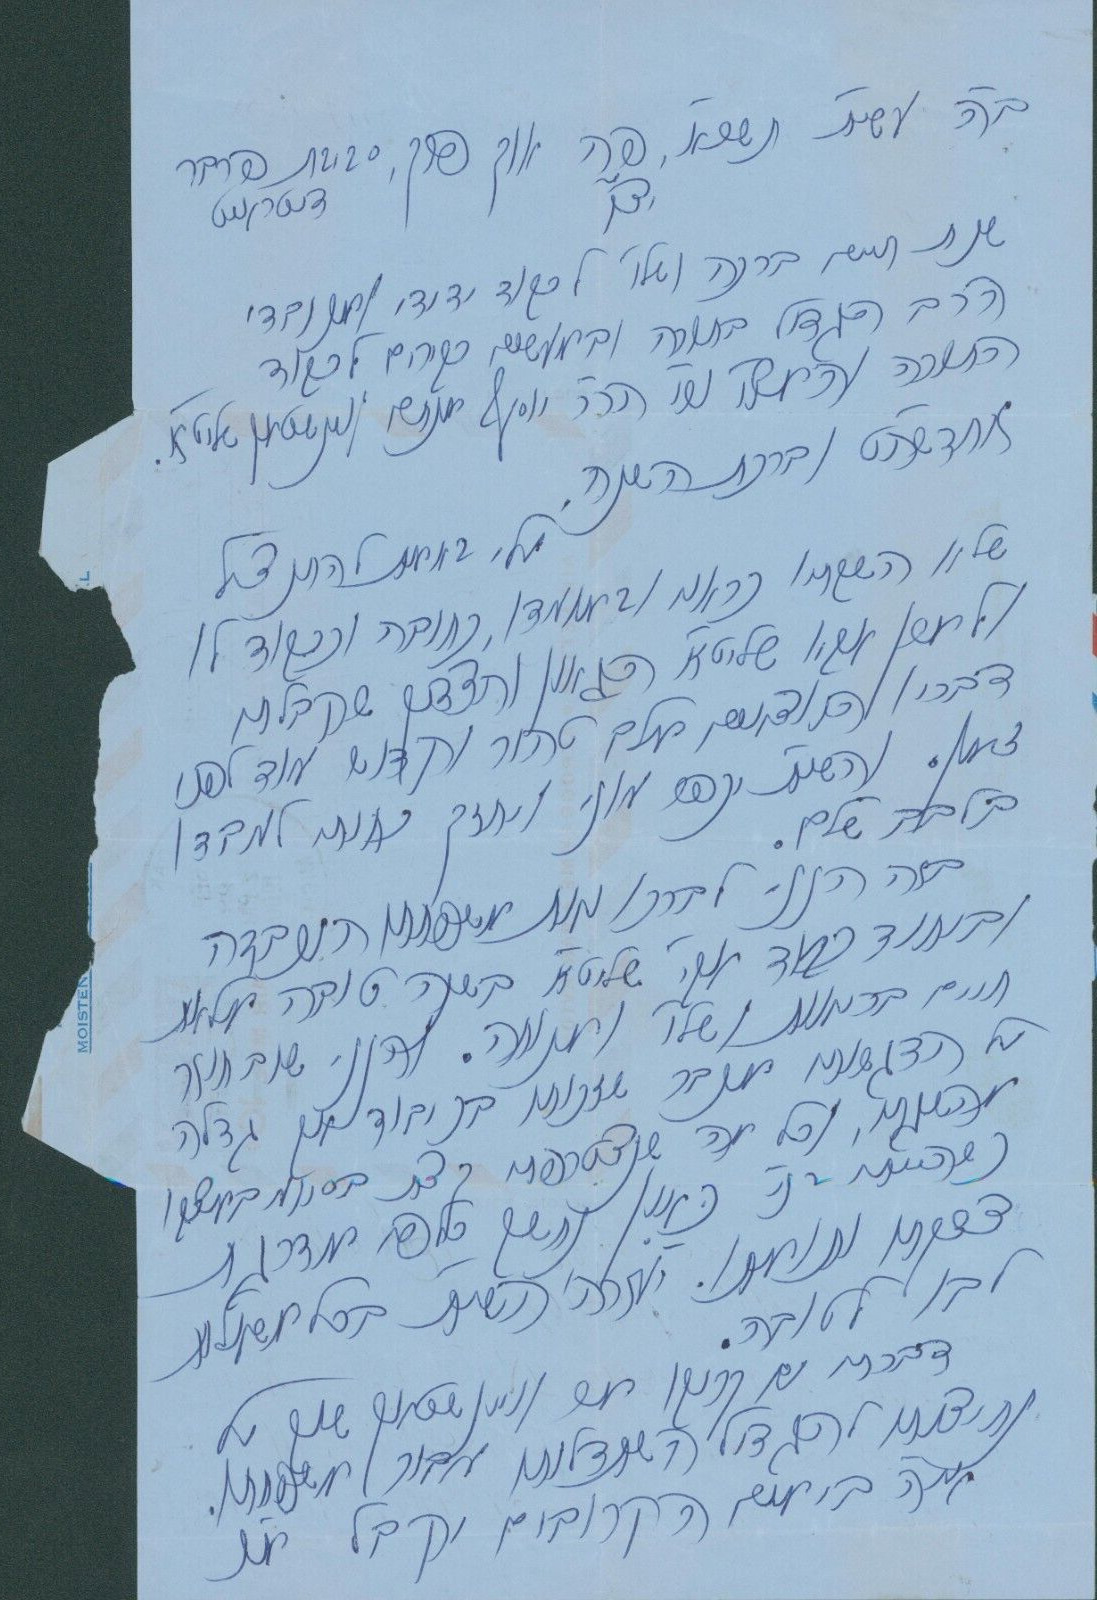 Letter Lithuanian Rabbi Yitzhak Stollman of Detroit religious Zionist leader